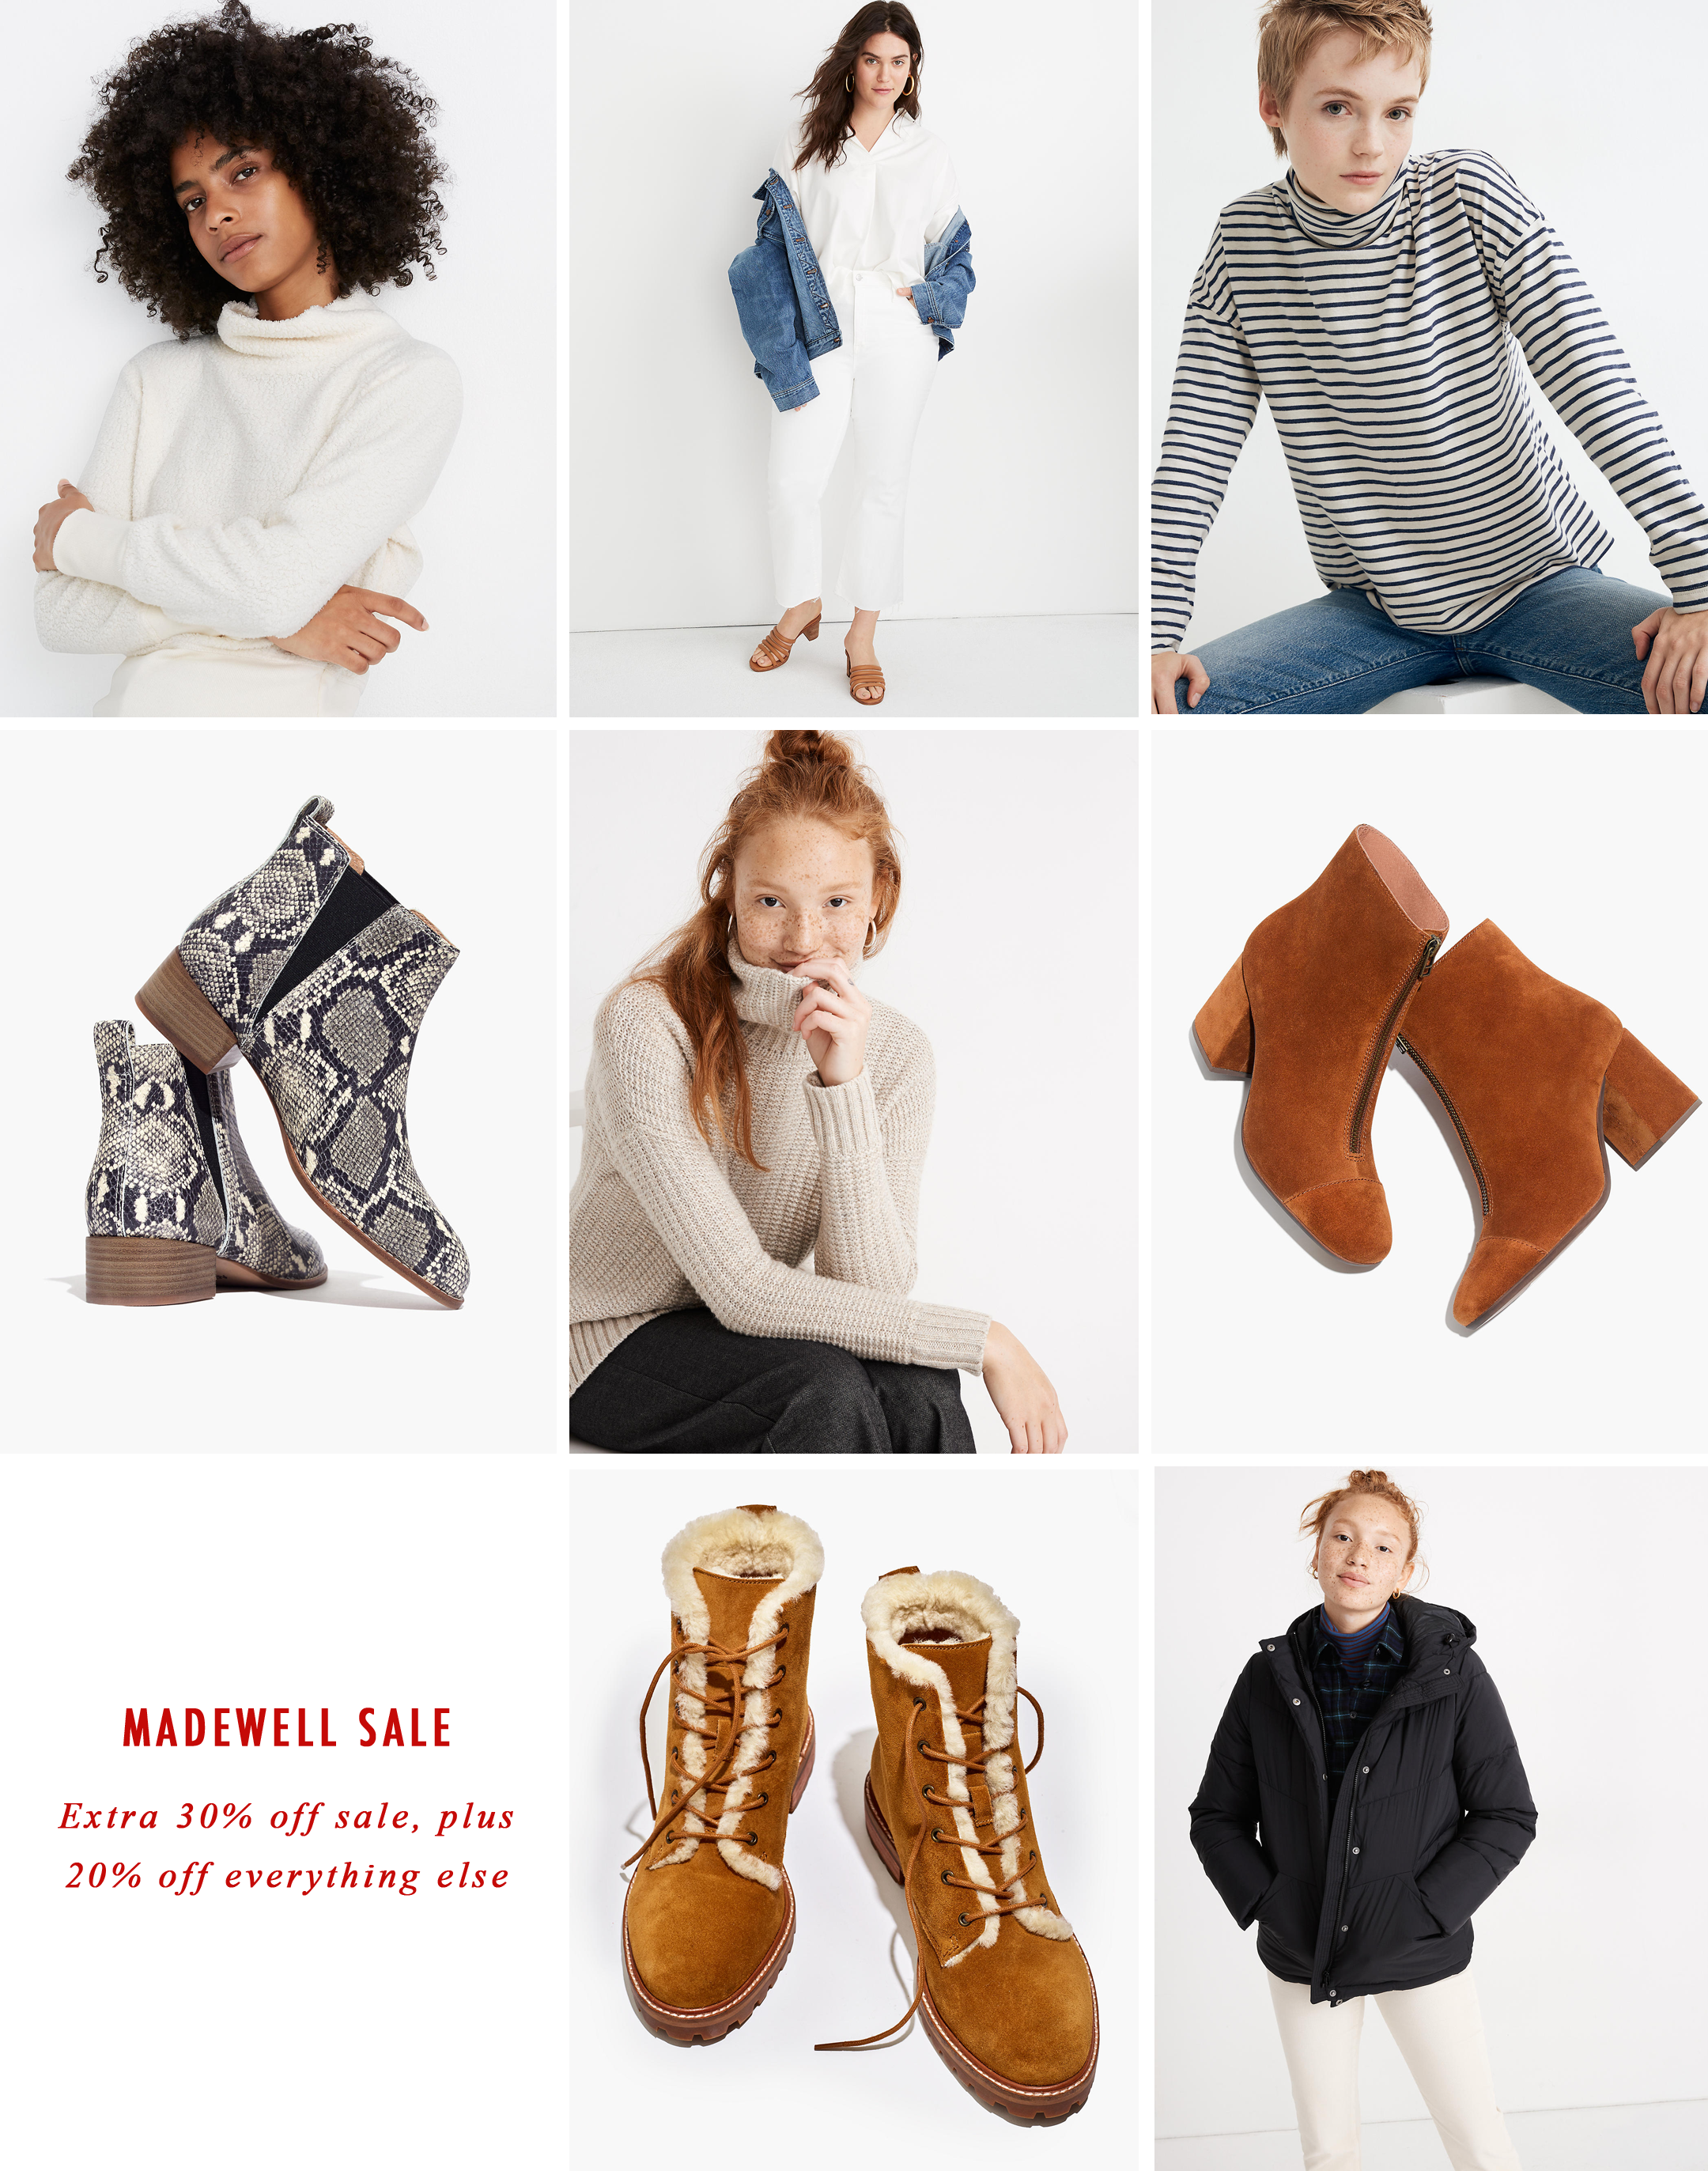 Madewell sale